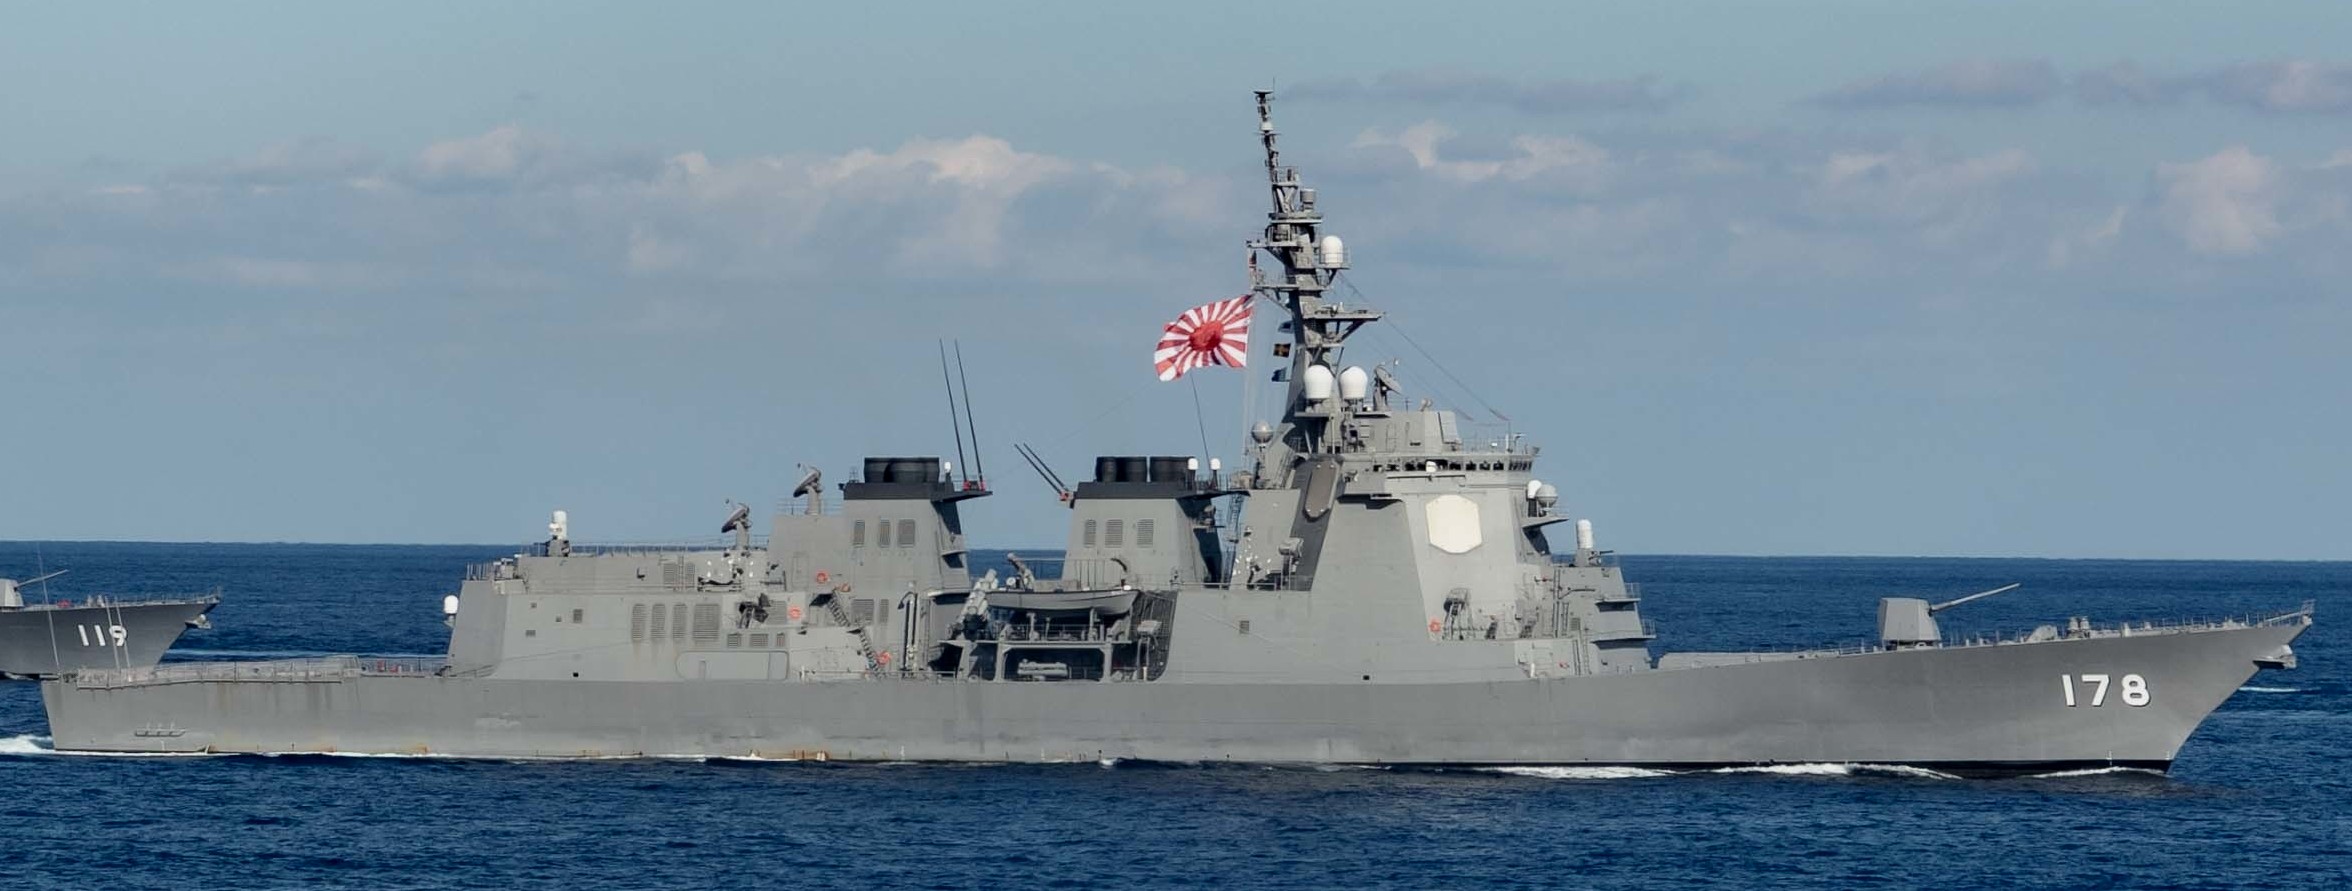 ddg-178 jds ashigara atago class guided missile destroyer japan maritime self defense force jmsdf mitsubishi sasebo nagasaki 31x